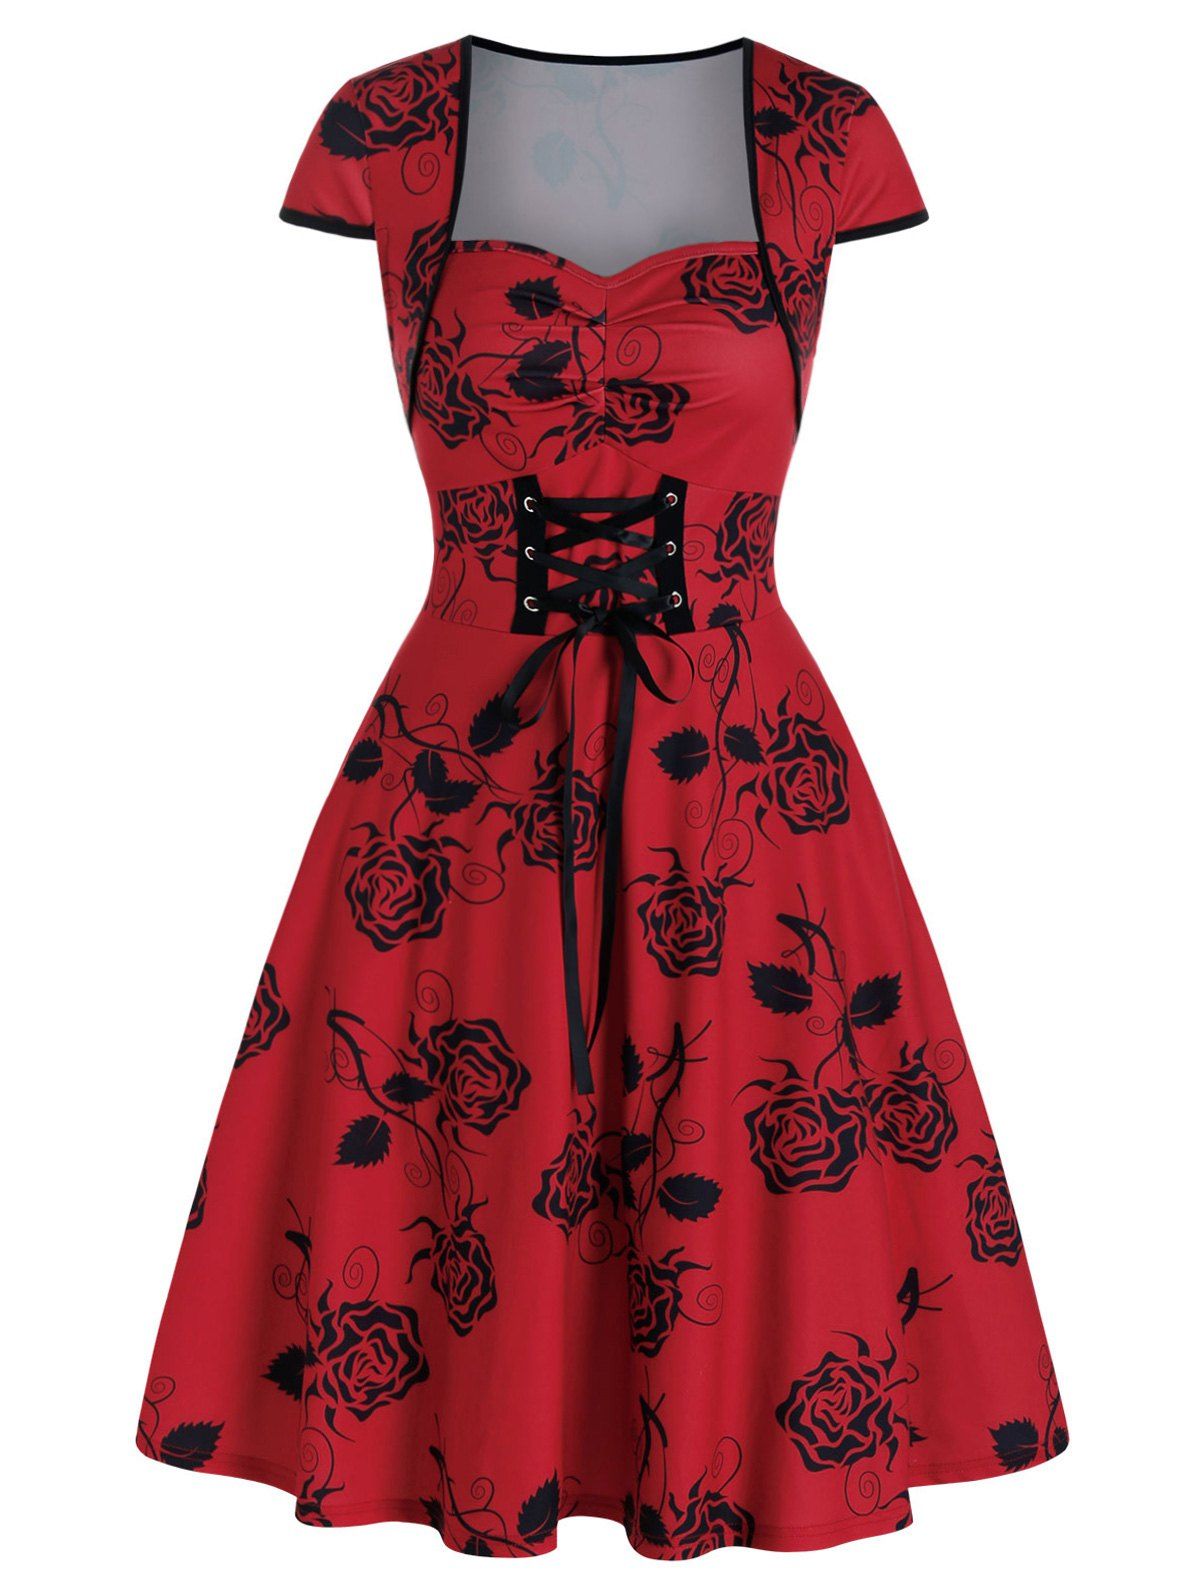 Floral Print Lace Up Cap Sleeve A Line Dress - LAVA RED M